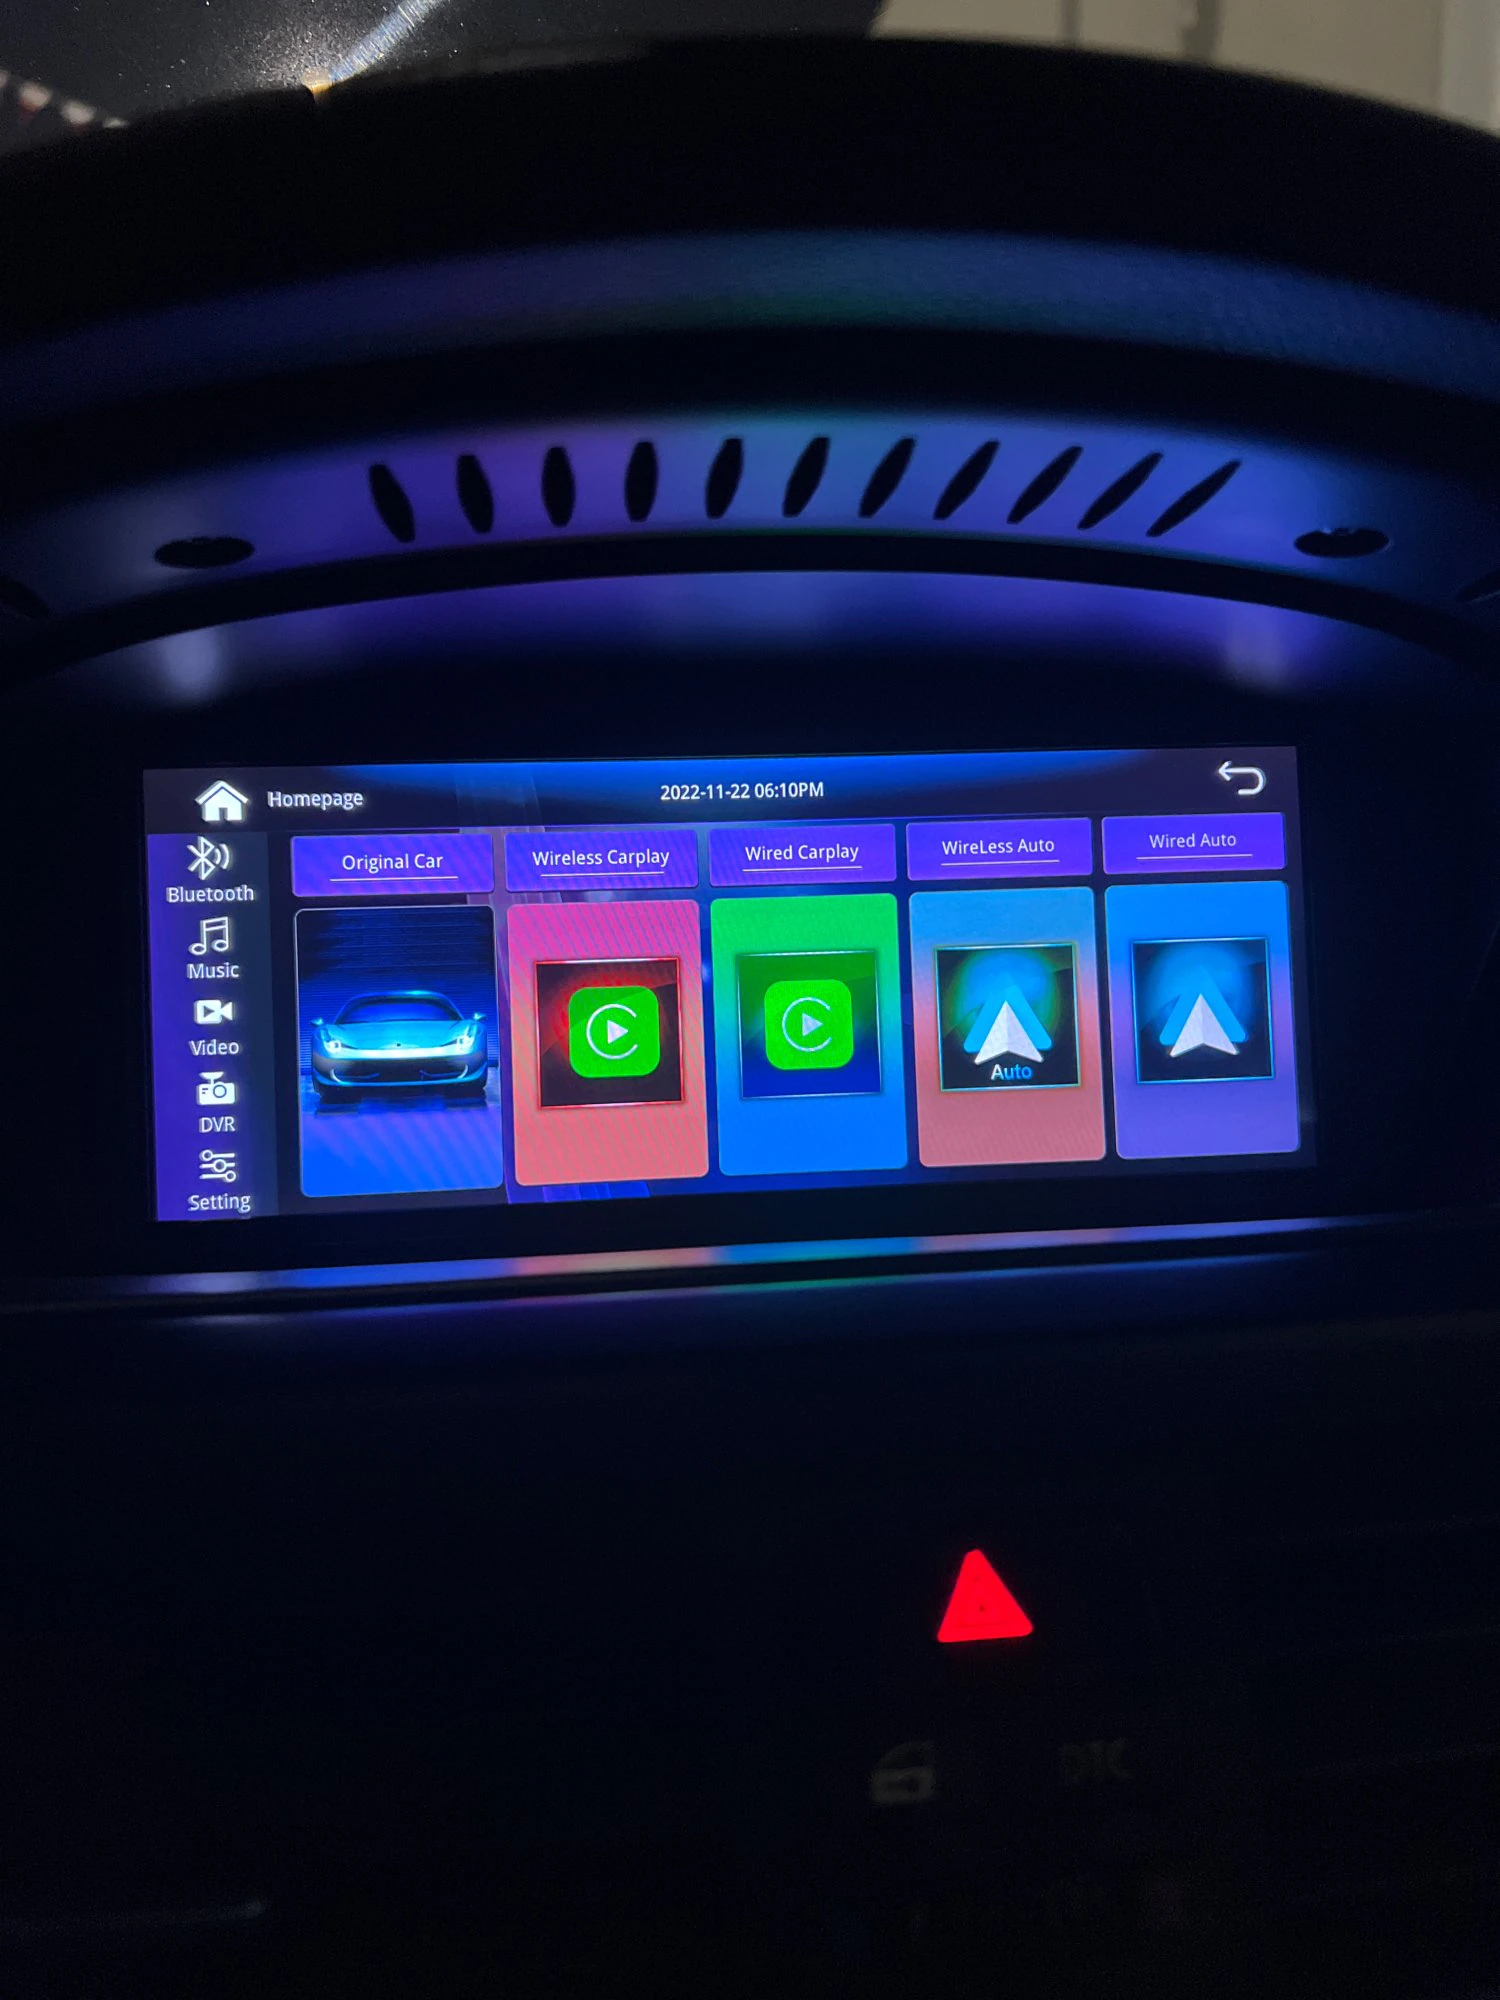 10.25inch Wireless Carplay Android Auto Car Multimedia 1920*720 Blue-Ray  Screen Radio for BMW 3 4 Series F30 F31 F32 F33 F34 F36 Head Unit - China  Car Radio for BMW, Car Audio